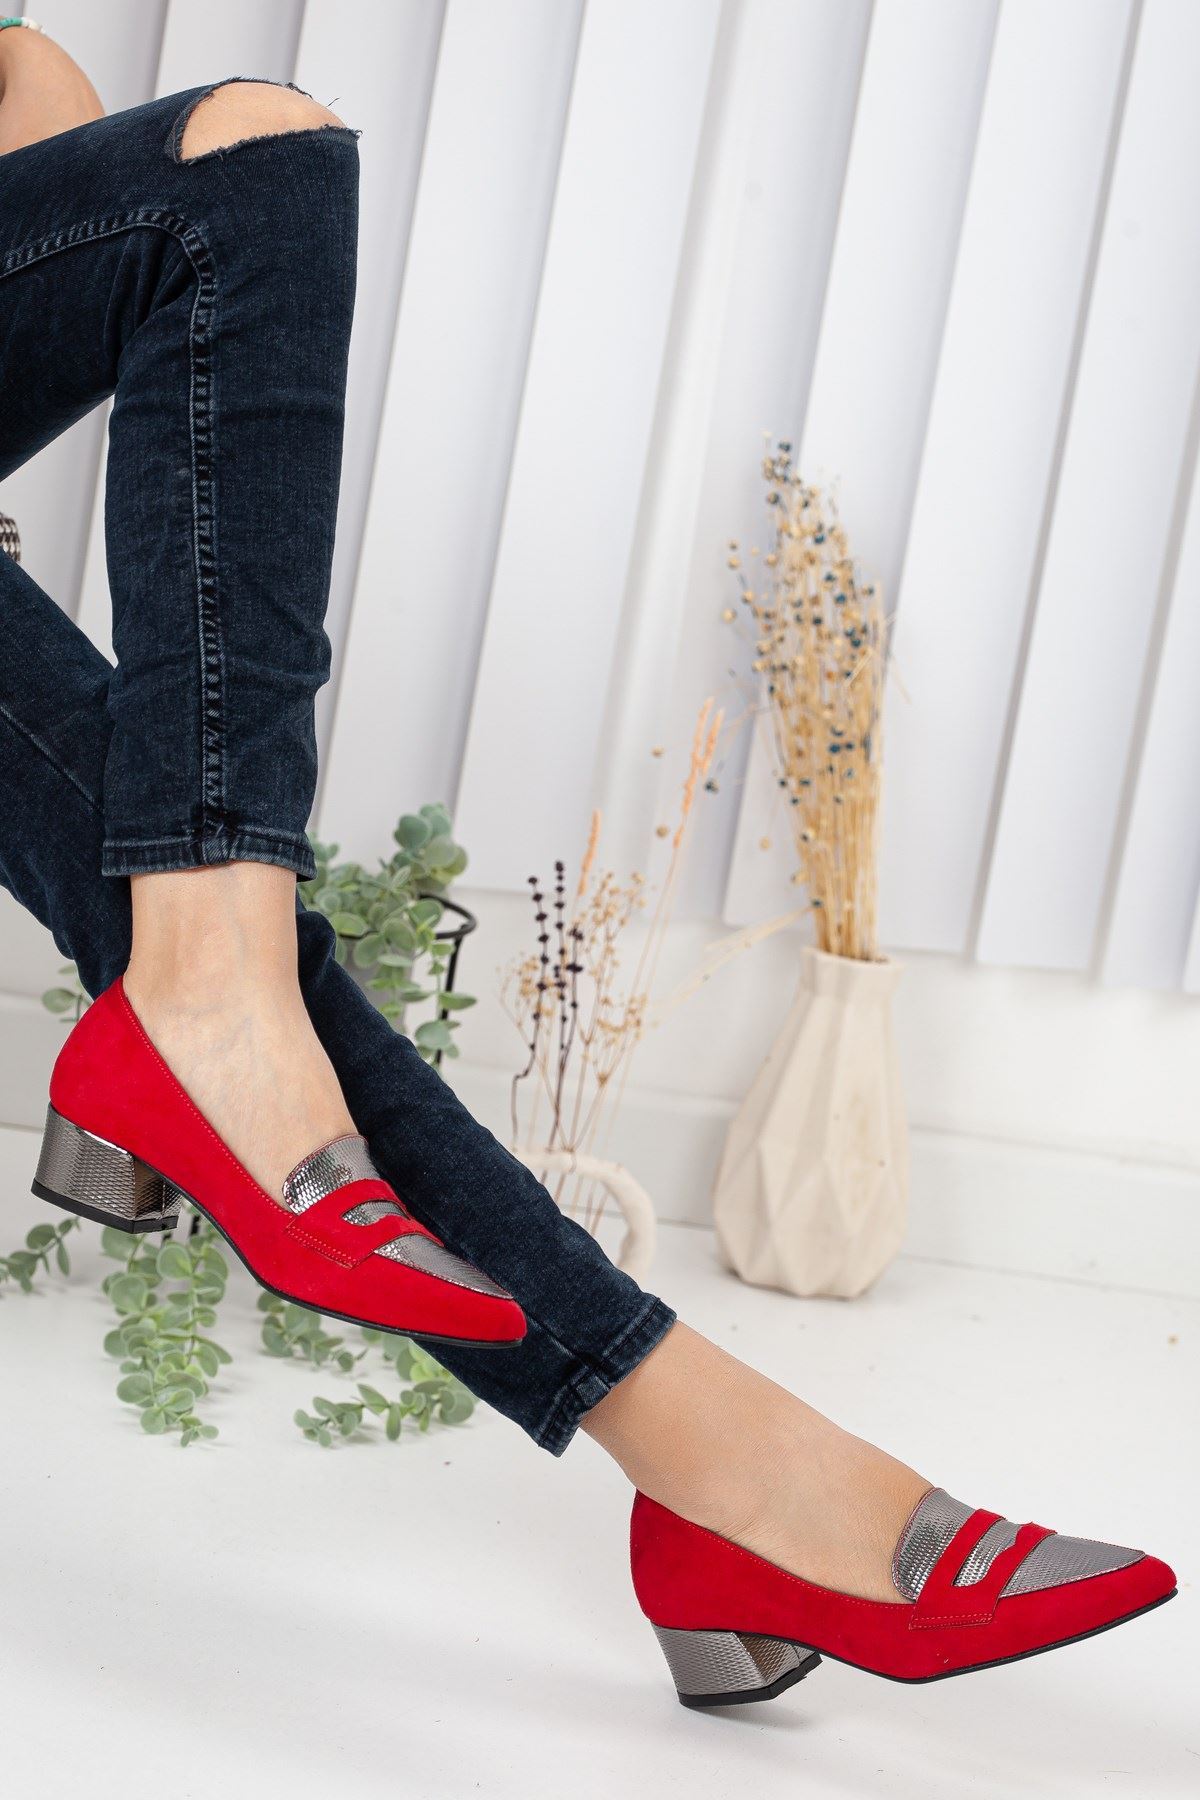 Mia Topuklu Kırmızı Süet Platin Detay Ayakkabı